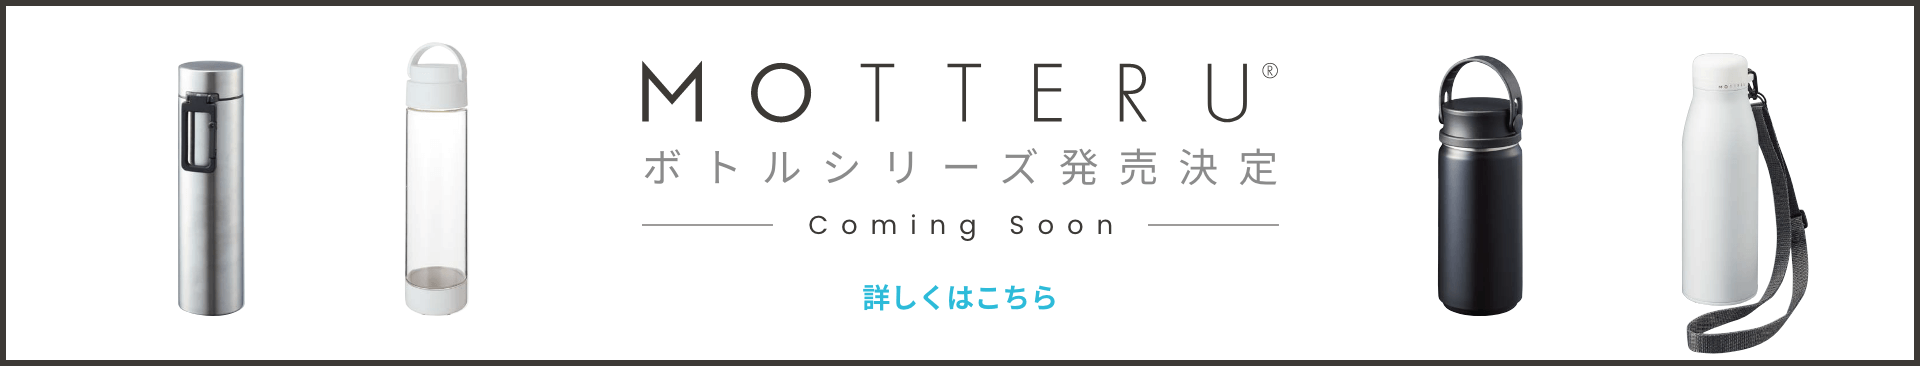 MOTTERUボトルシリーズ発売決定